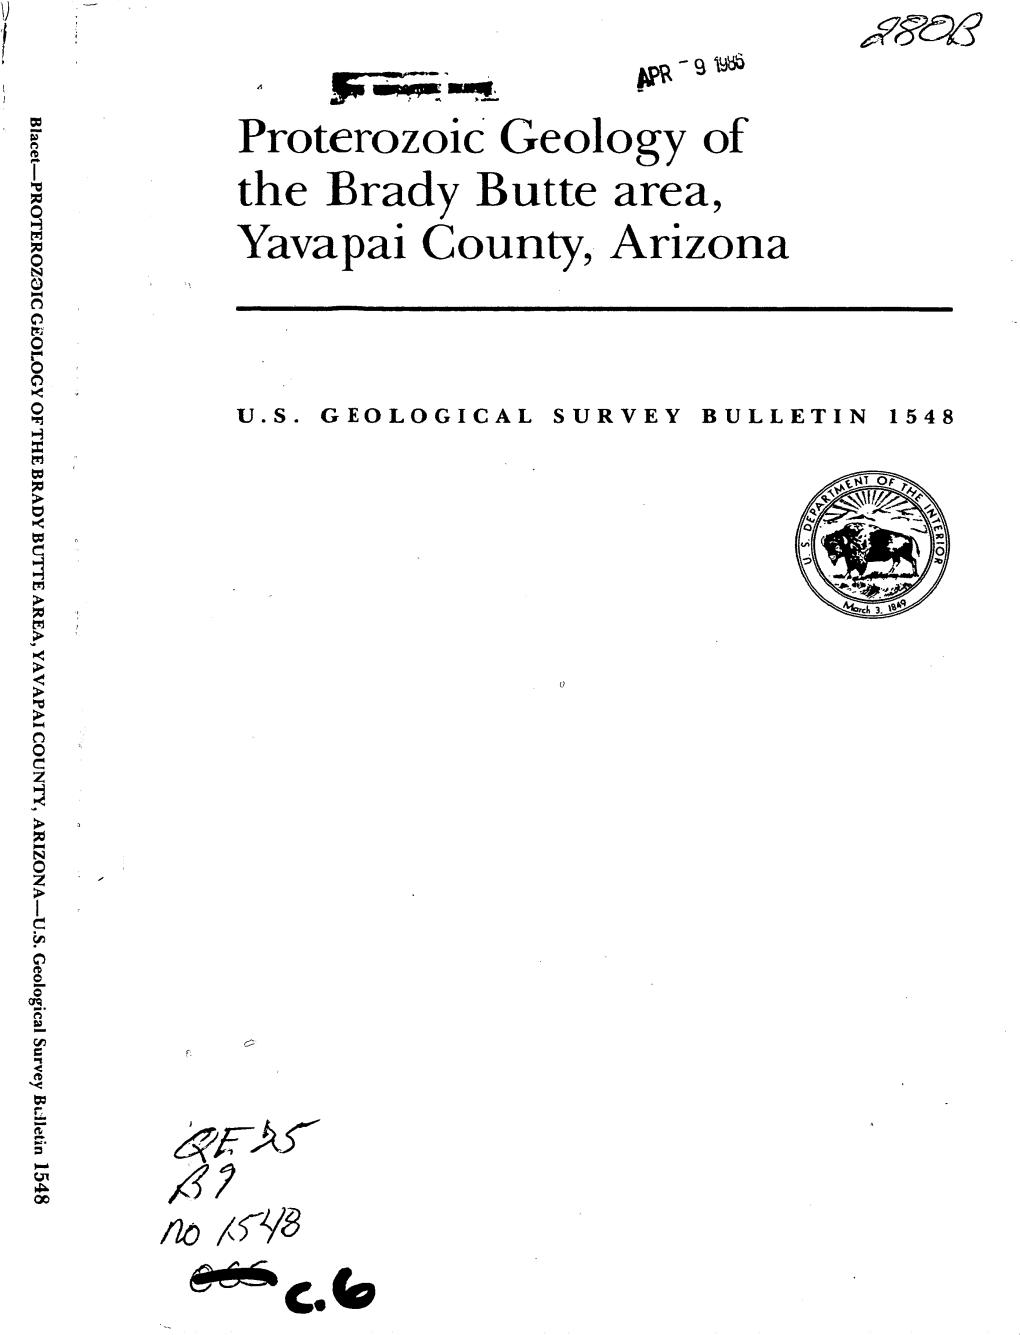 Proterozoic Geology of the Brady Butte Area, Yavapai County, Arizona